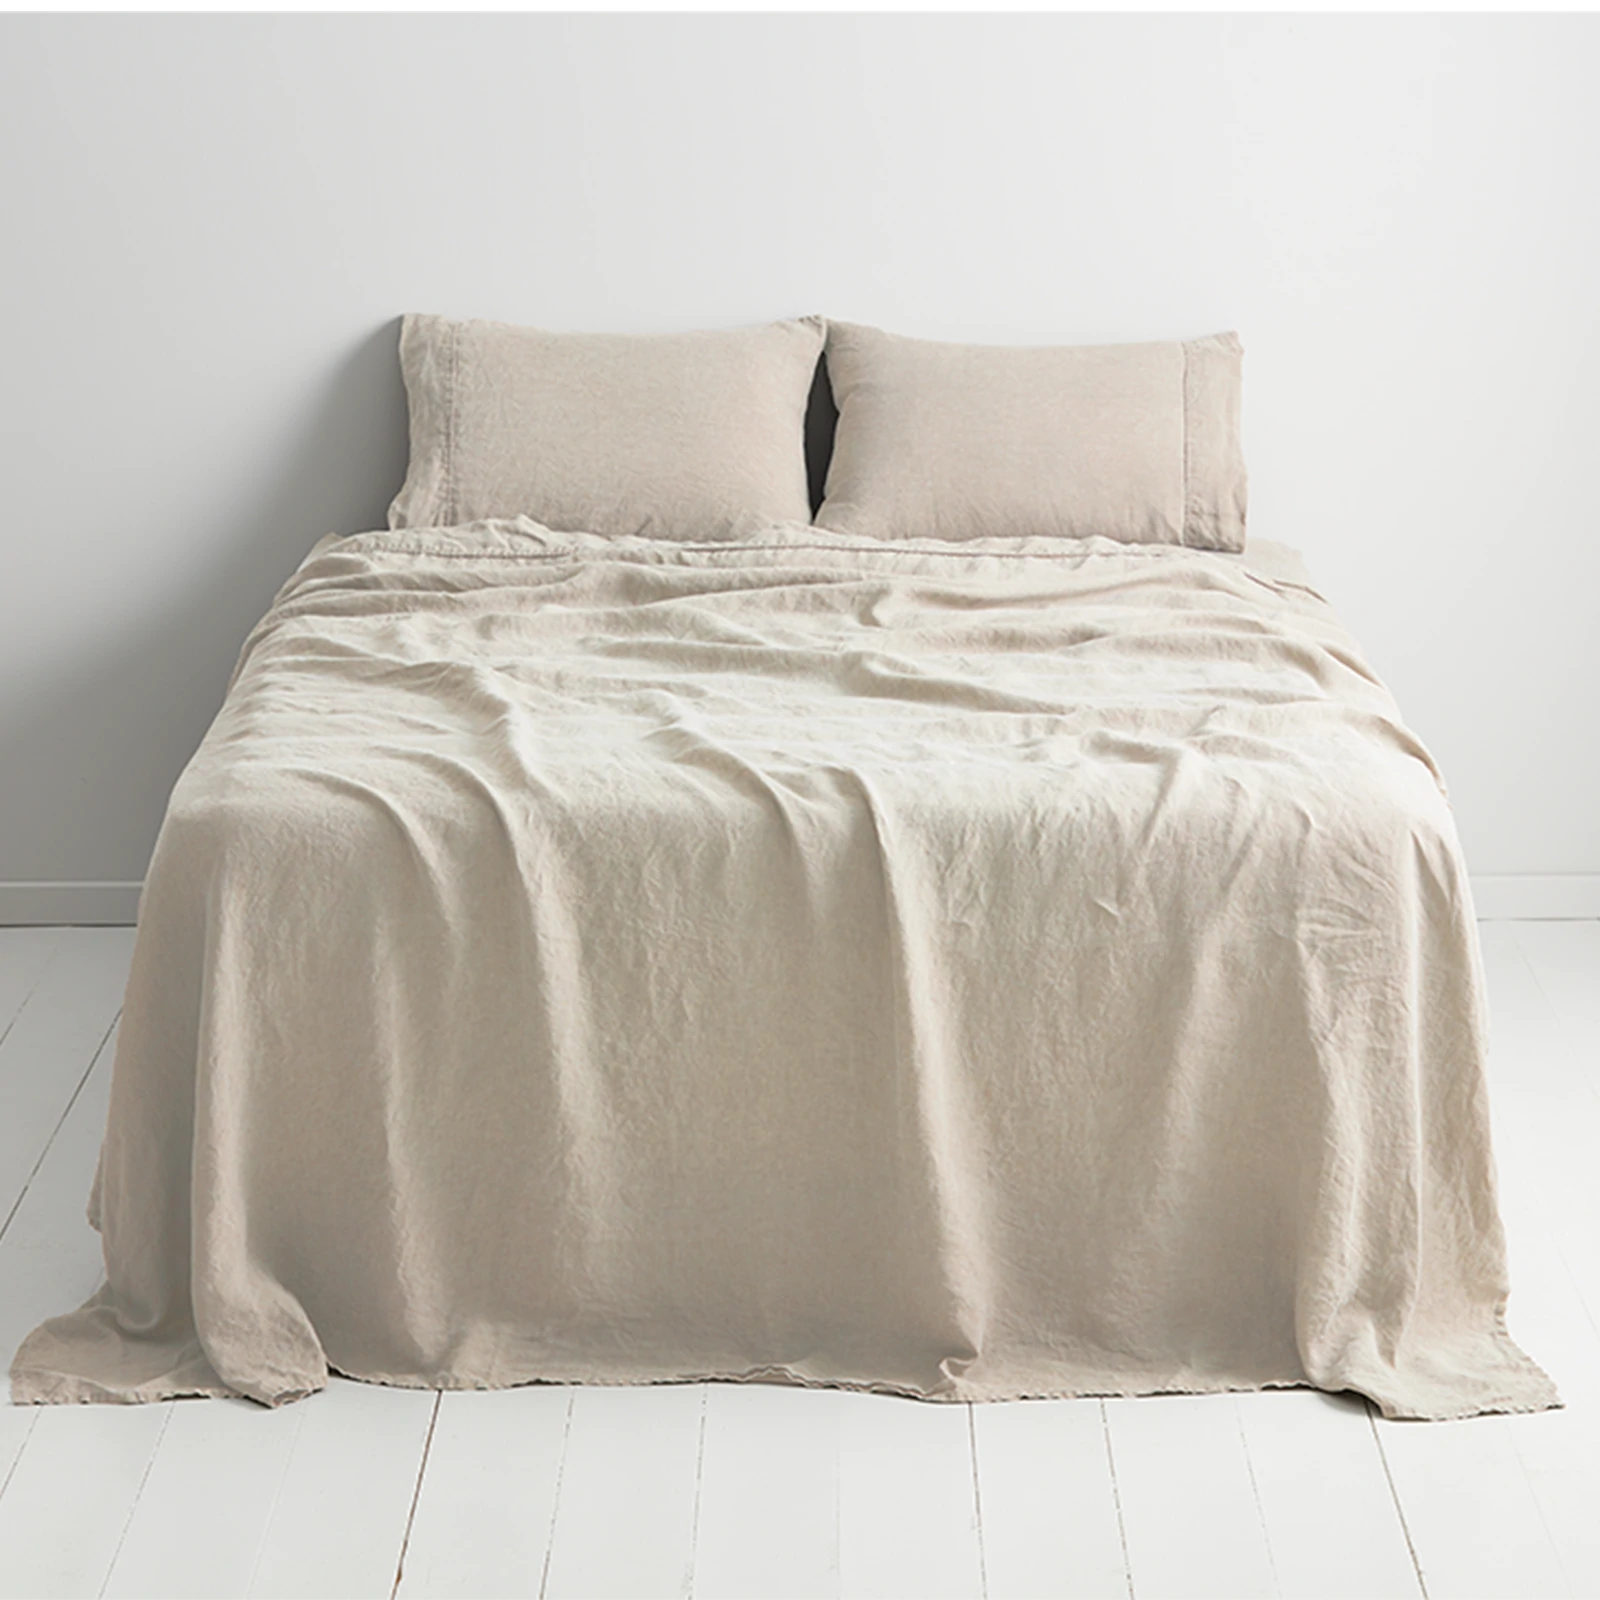 Best Bed Linen Brands In Australia - Dri-Glo